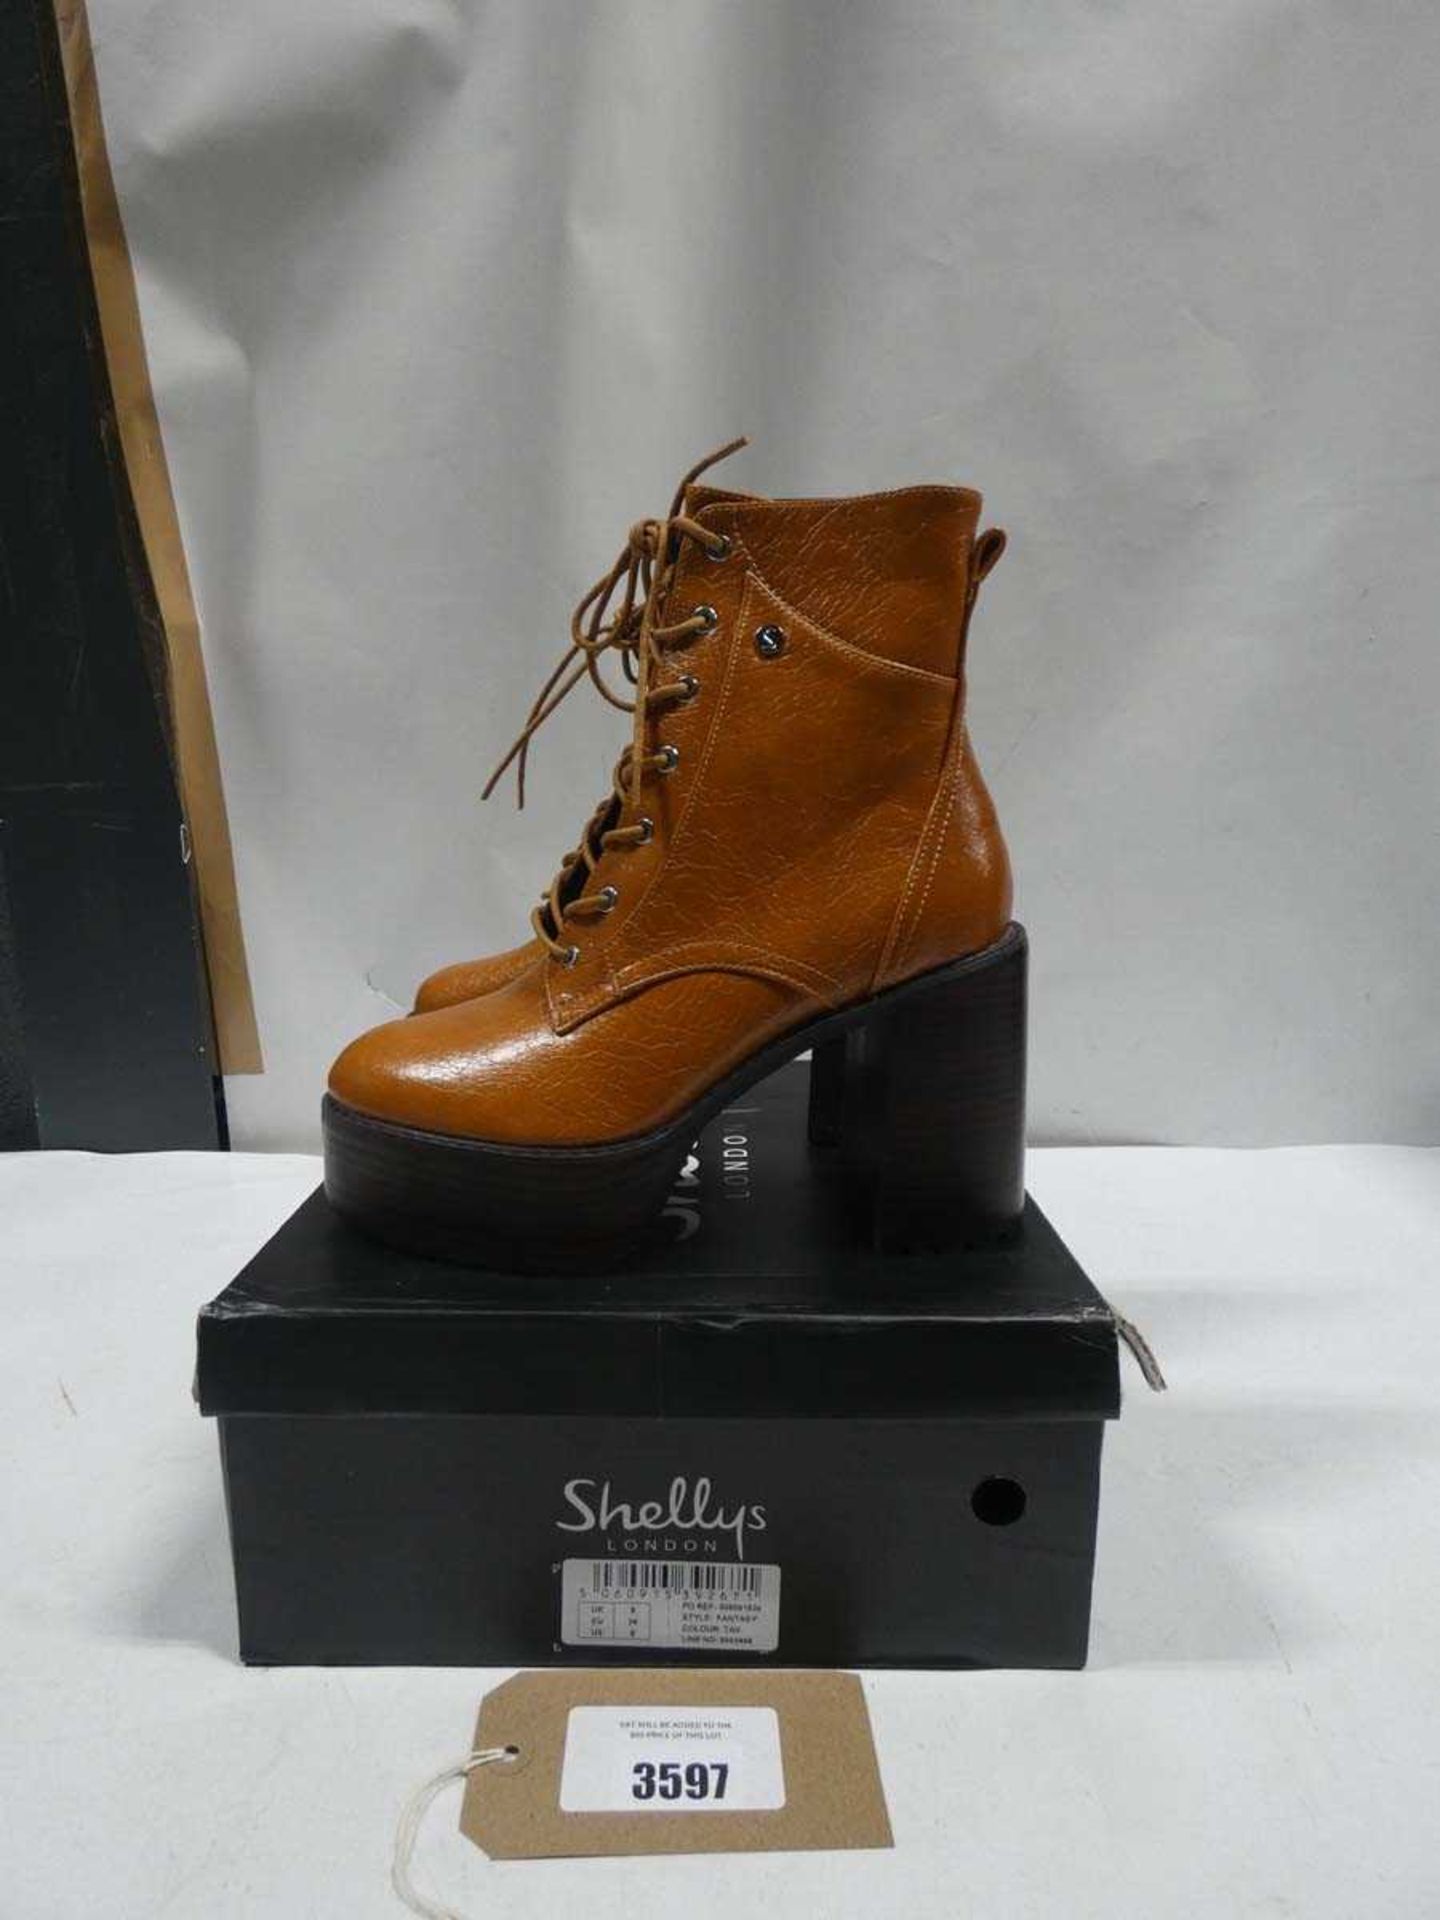 +VAT Shellys London boots size 6